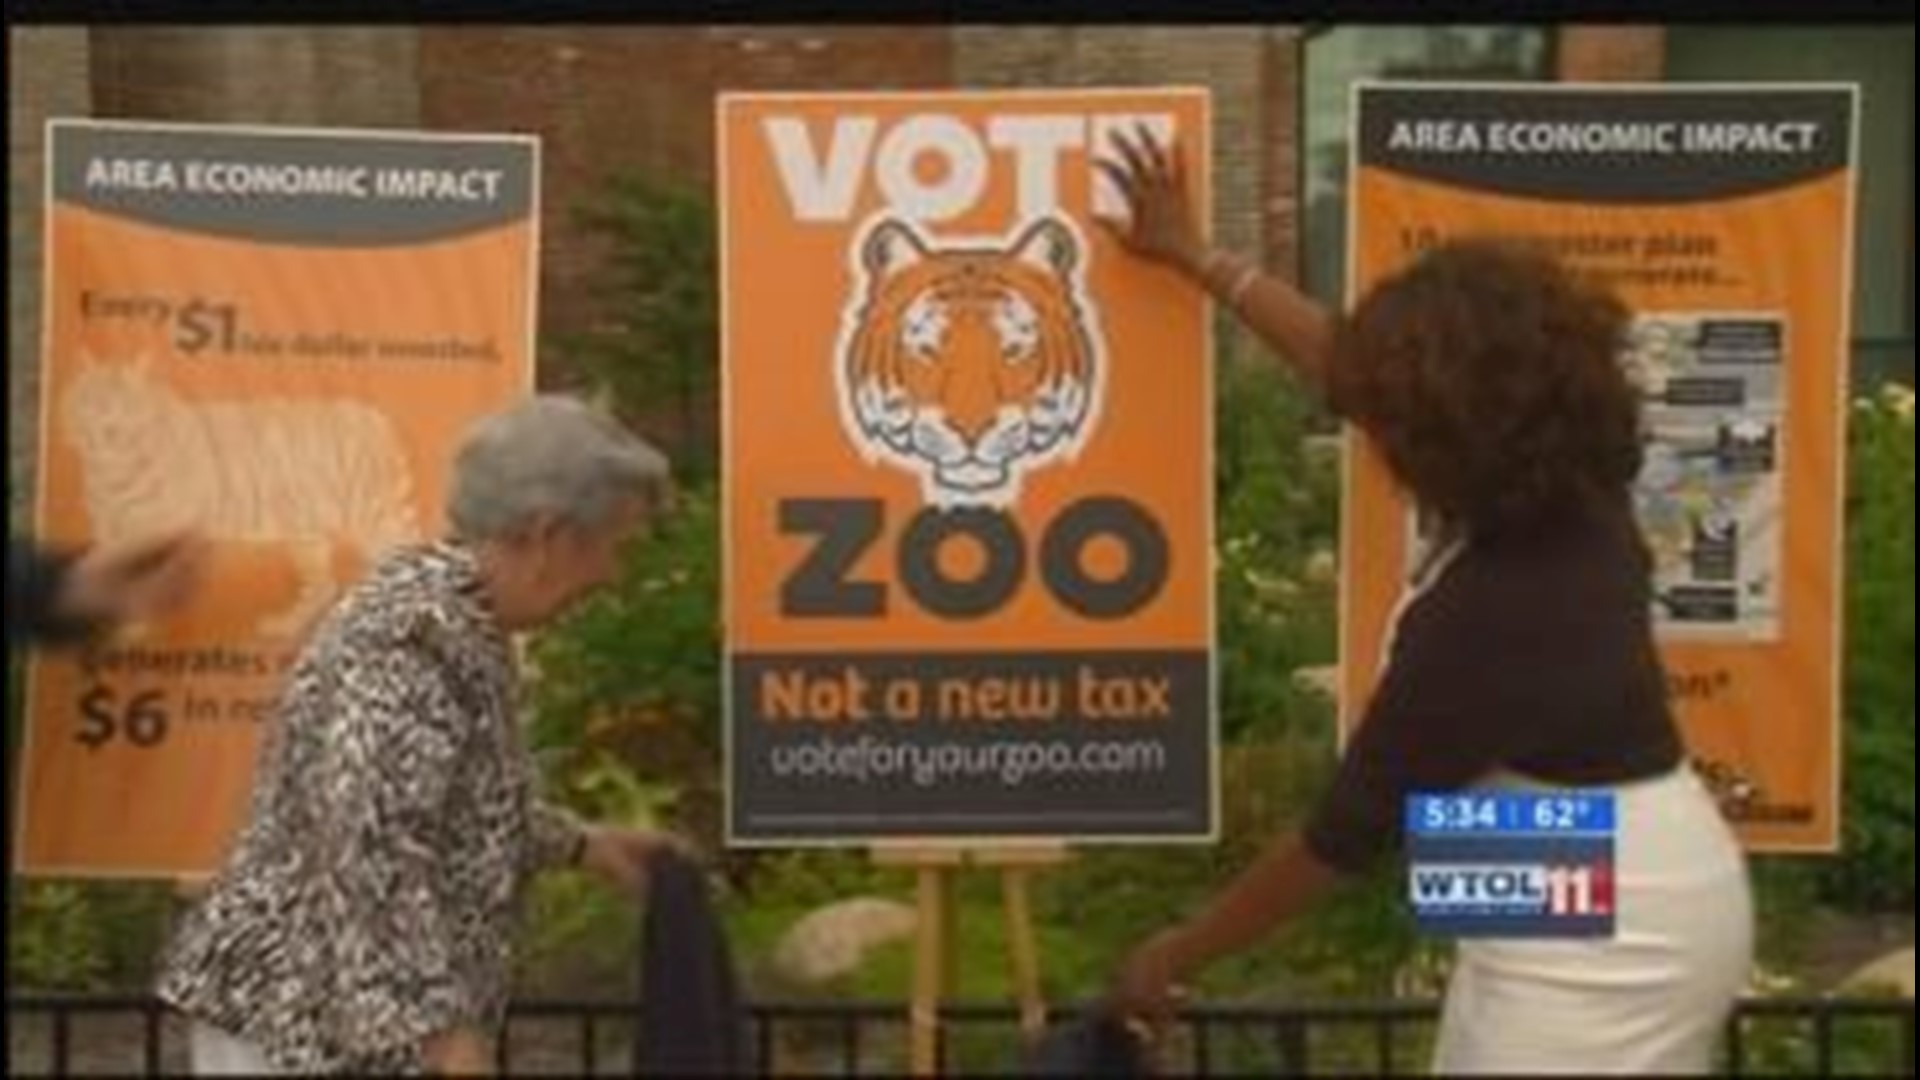 Zoo renewal levy kicks off today, Toledo attraction